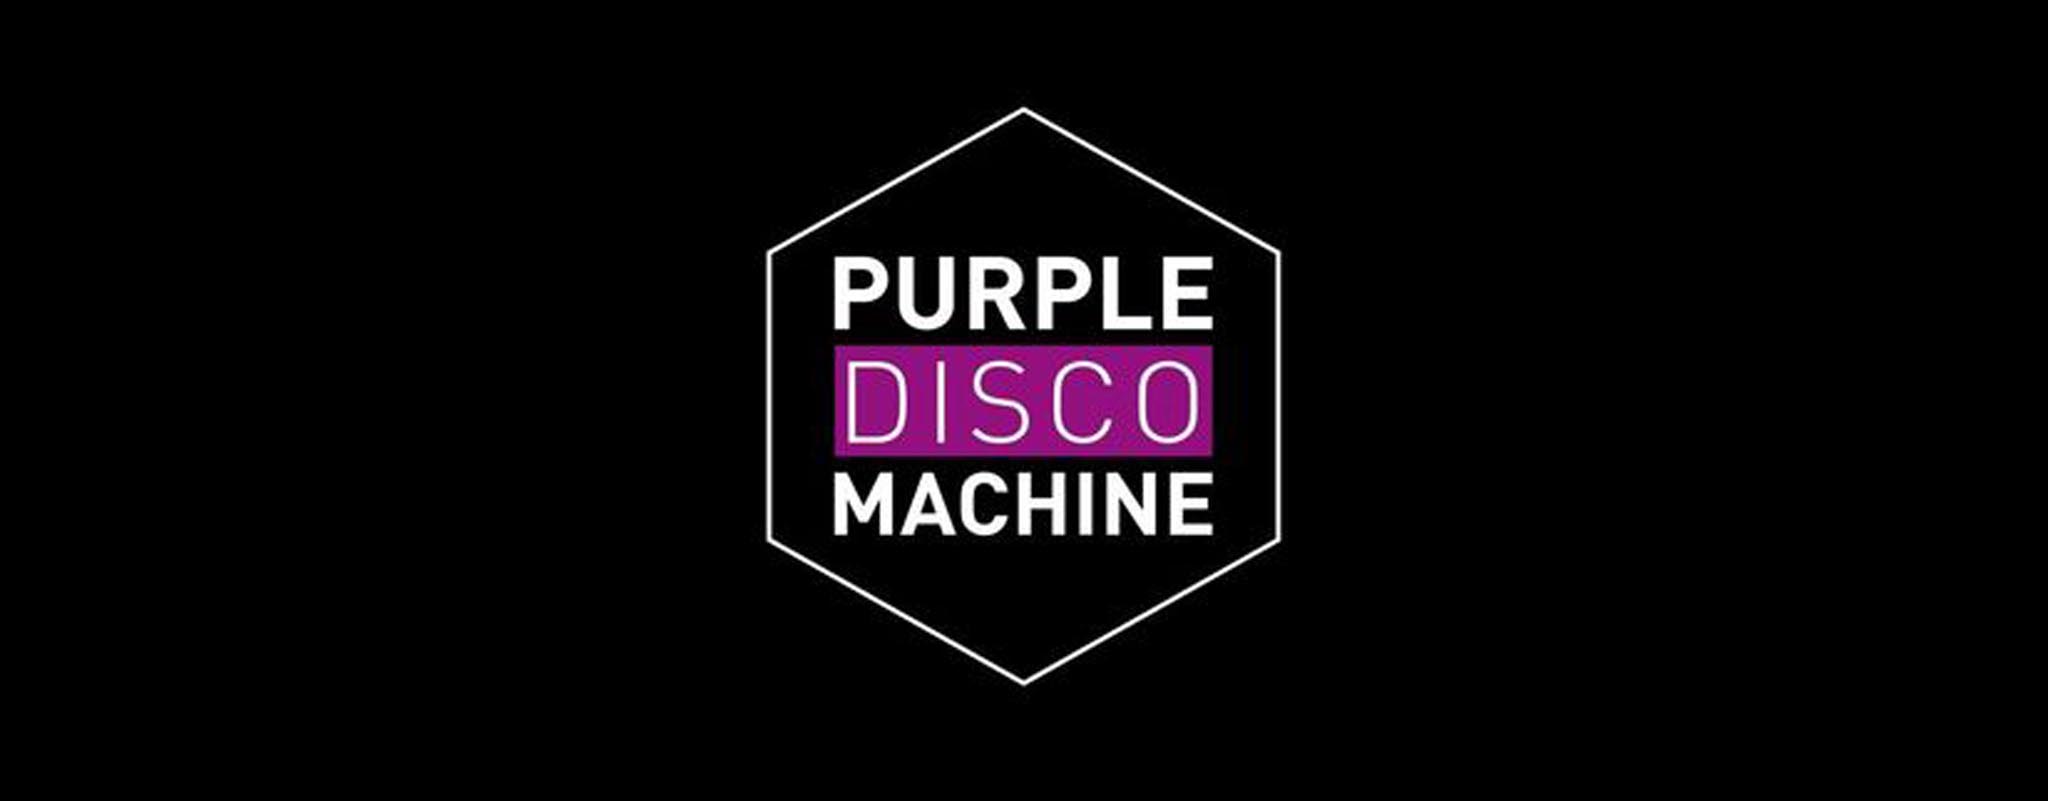 Purple Disco Machine making waves